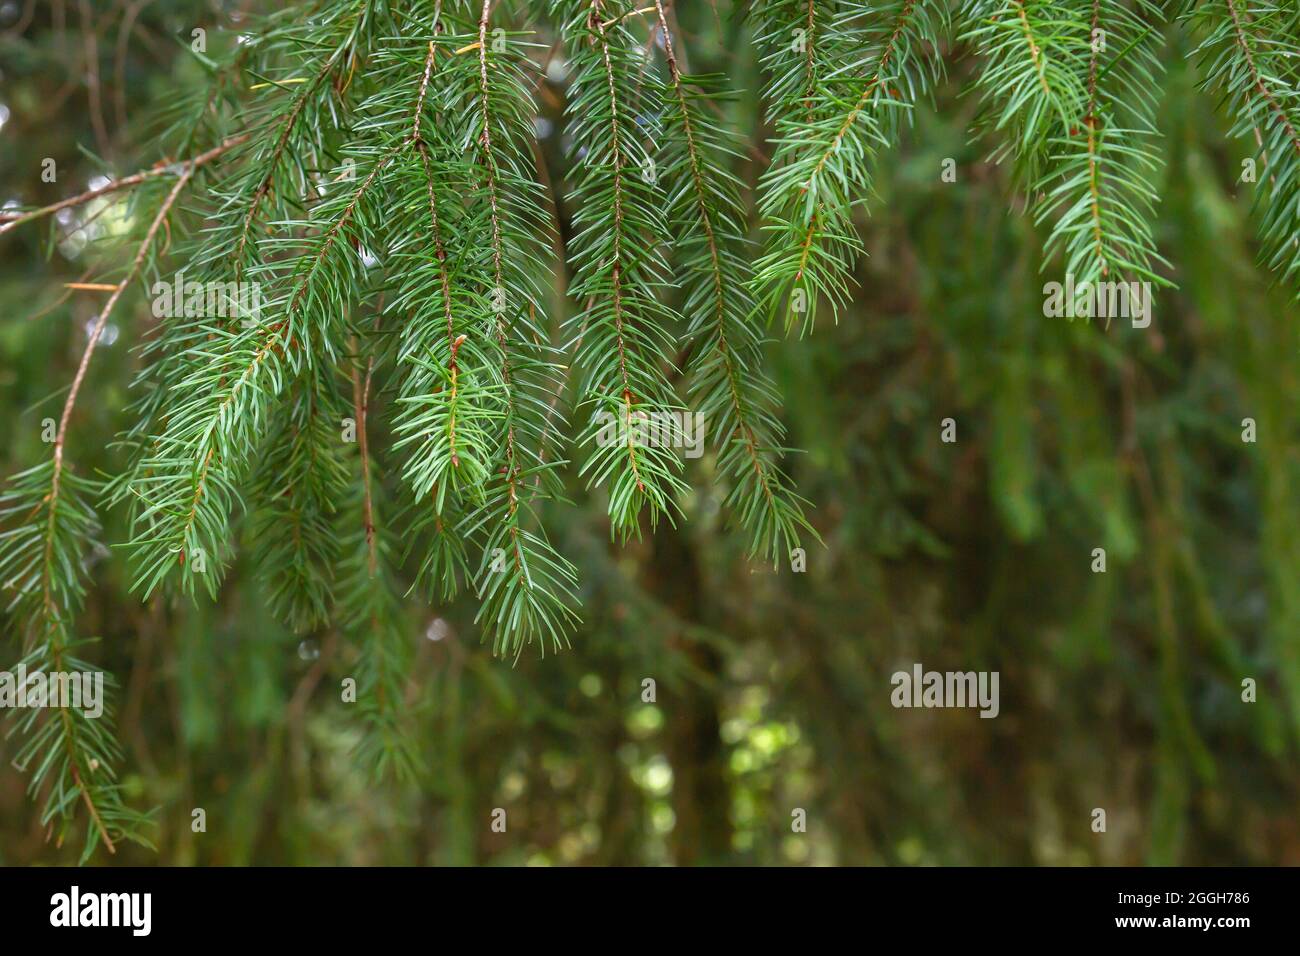 Abies alba or European silver fir evergreen coniferous tree green needle-like foliage Stock Photo